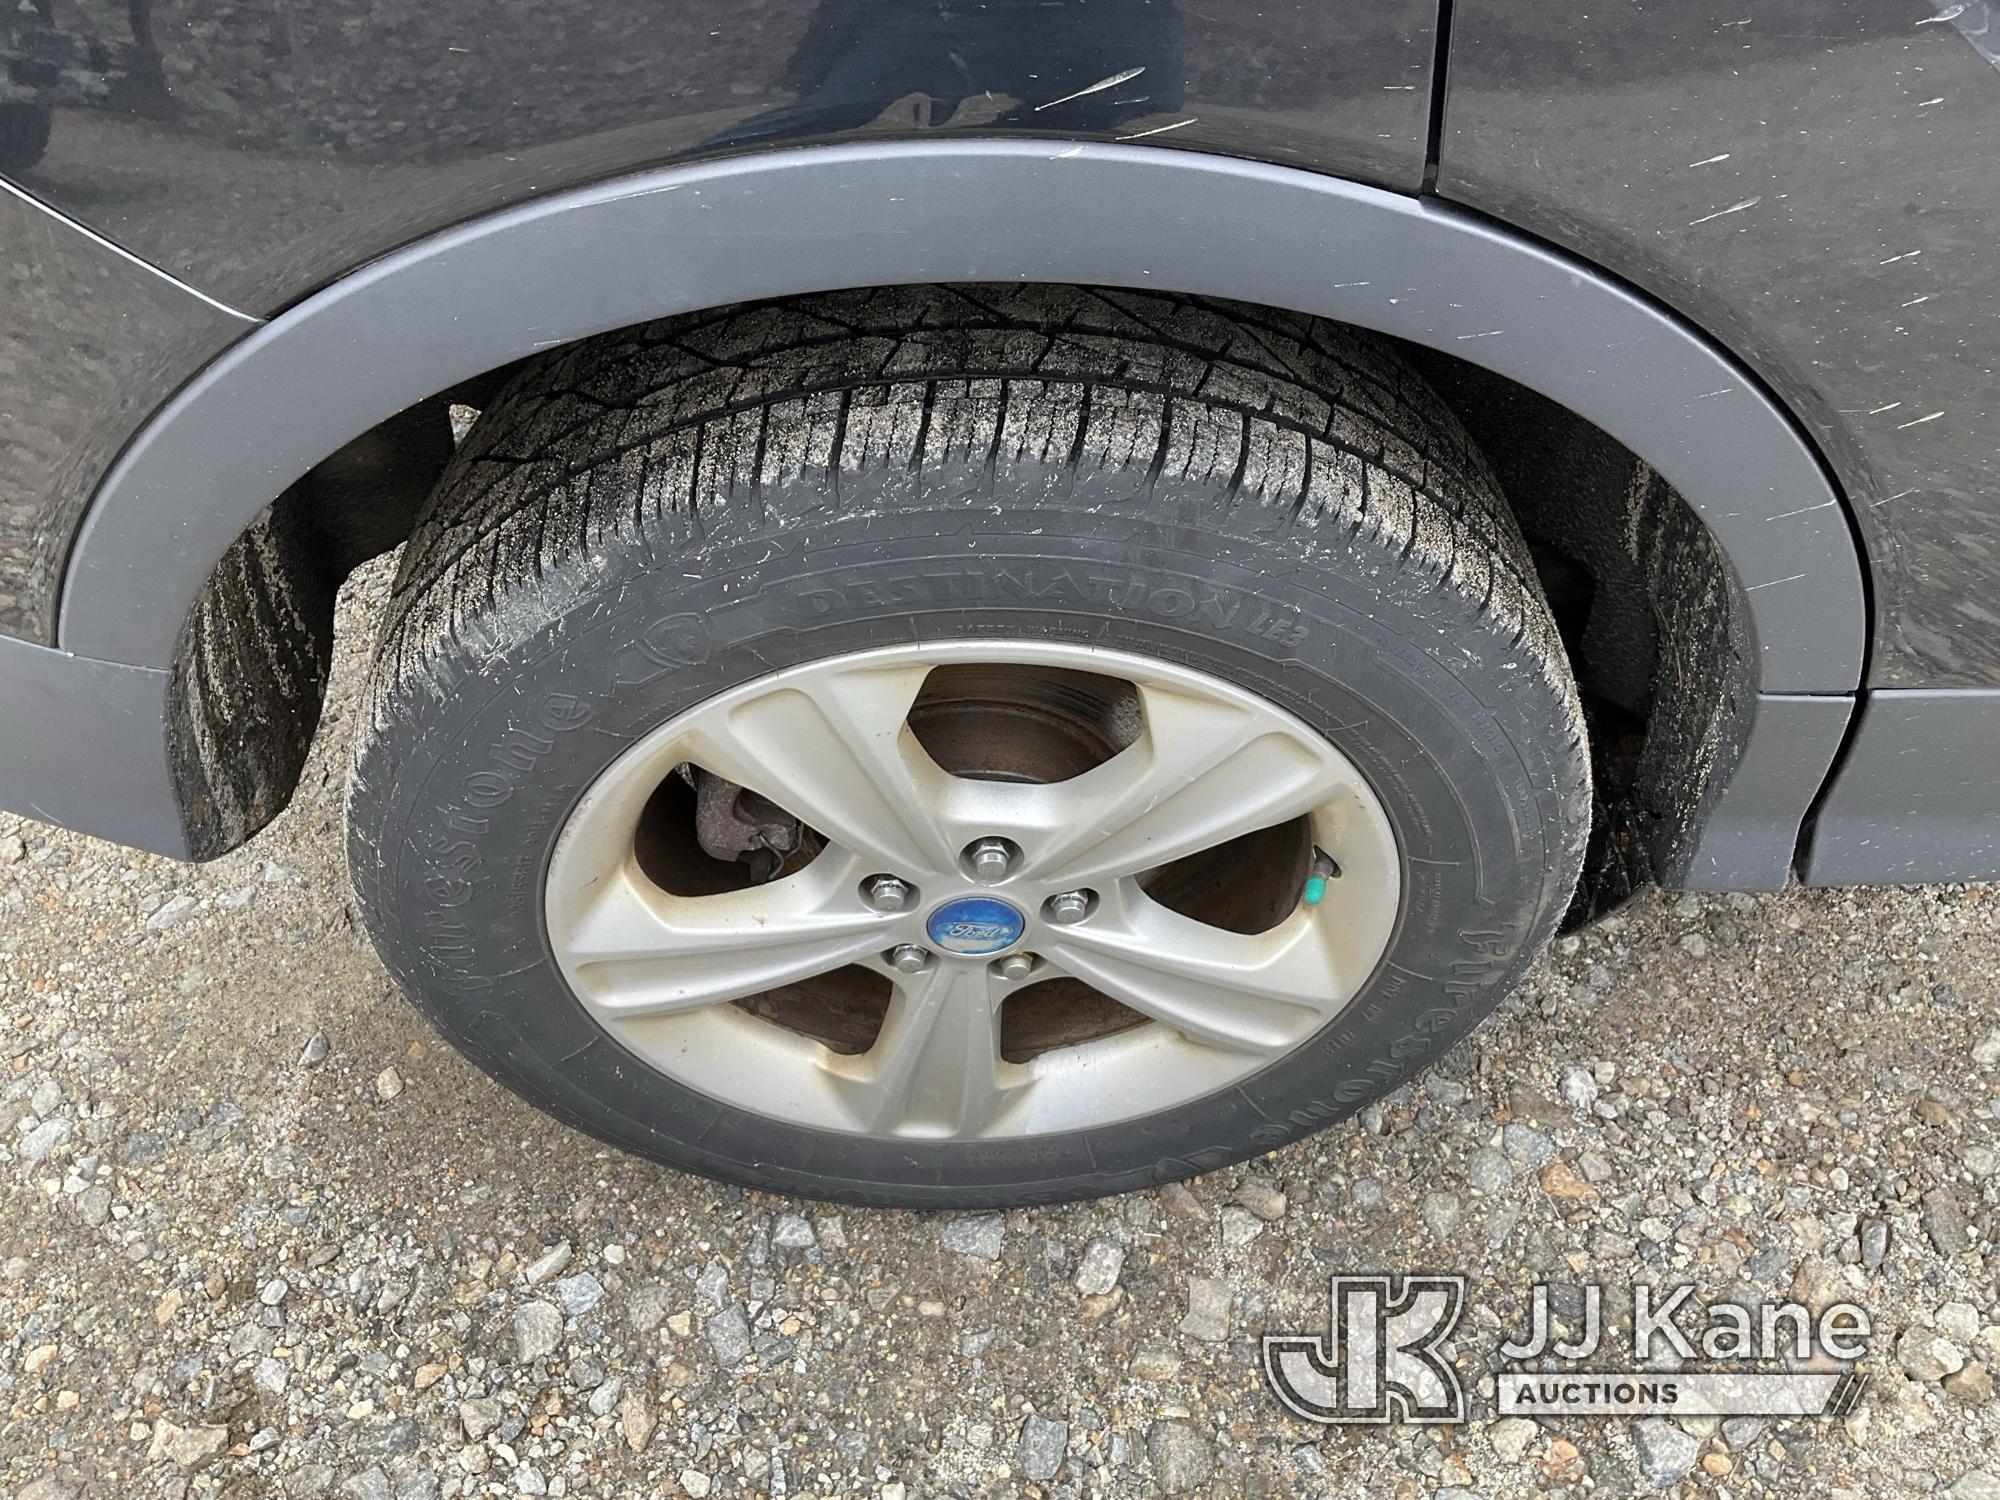 (Shrewsbury, MA) 2013 Ford Escape 4x4 4-Door Sport Utility Vehicle Runs & Moves) (Rust Damage